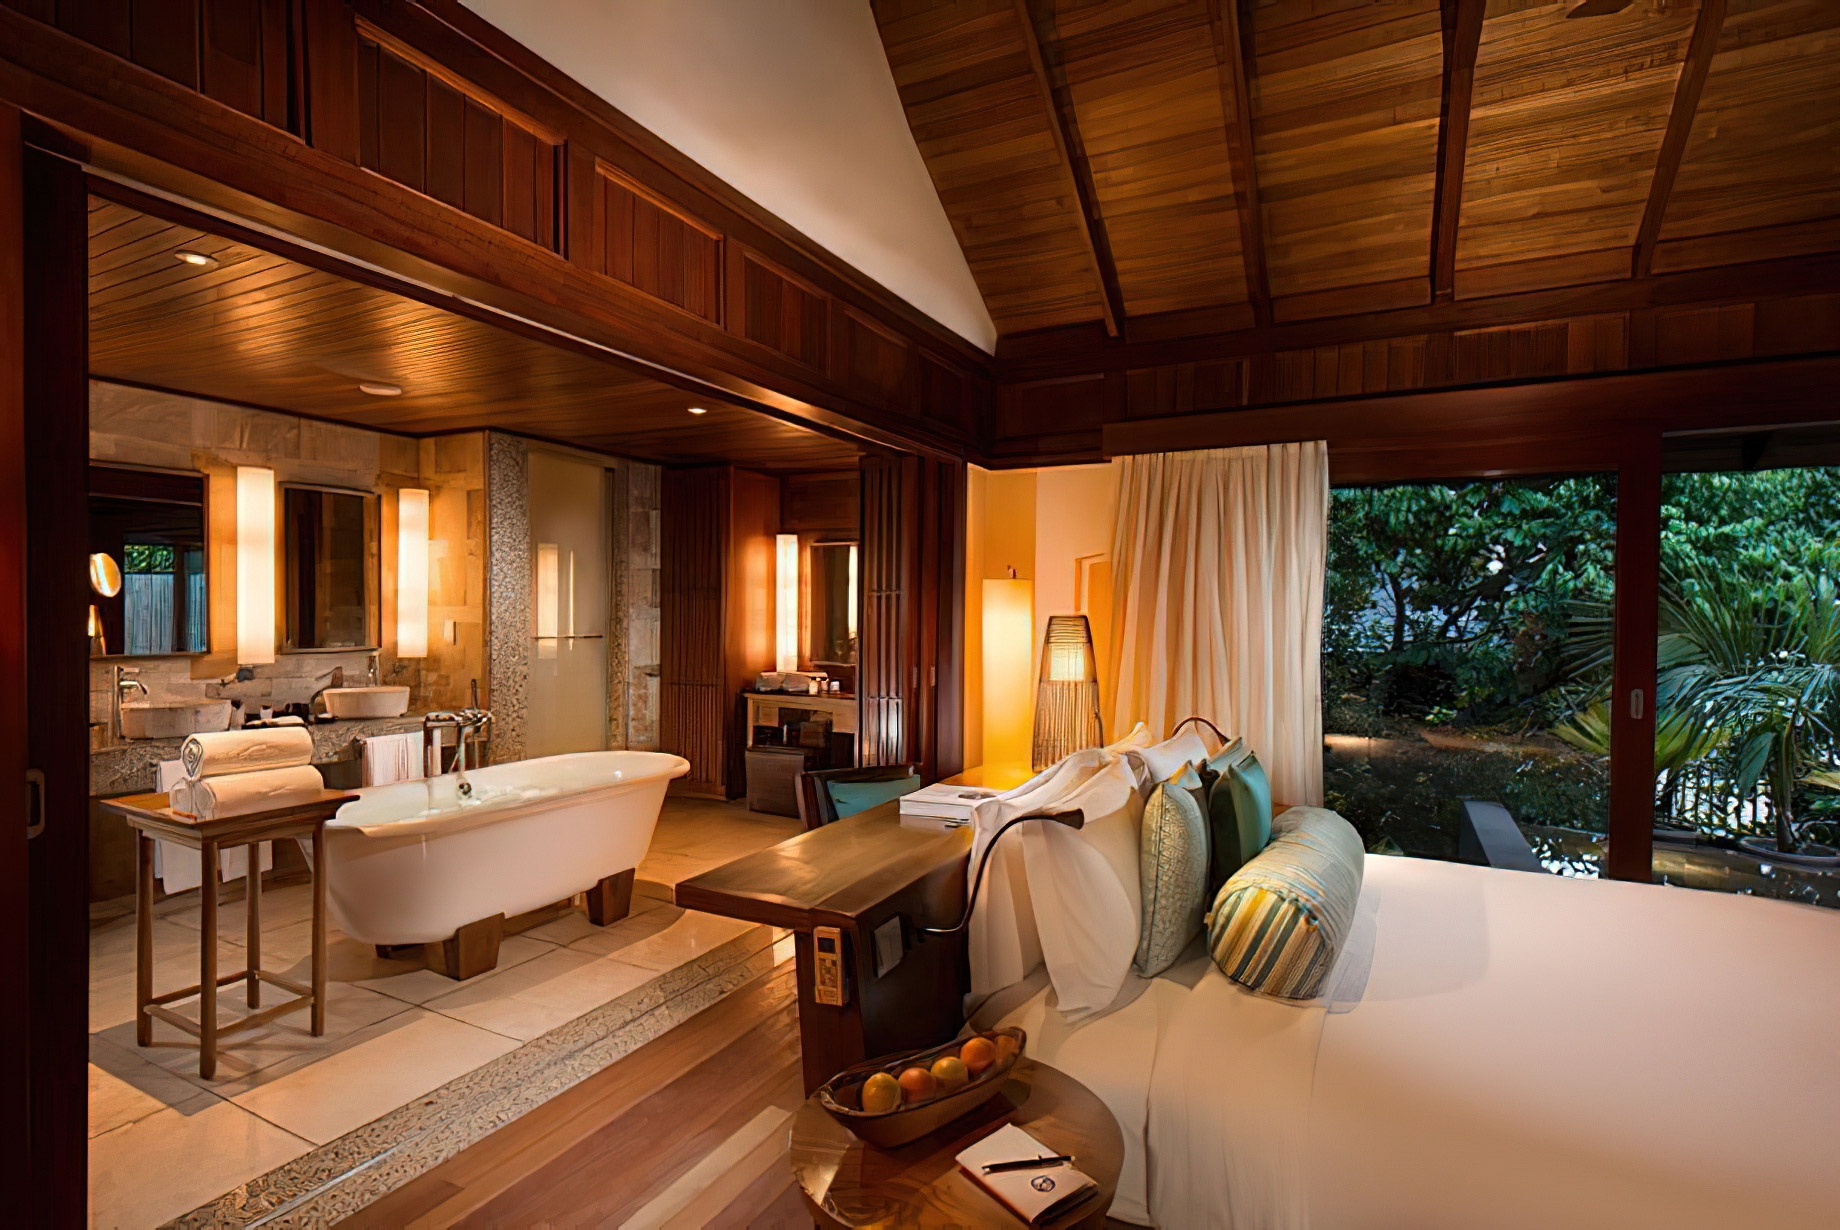 Constance Ephelia Resort - Port Launay, Mahe, Seychelles - Hillside Villa Bedroom Interior